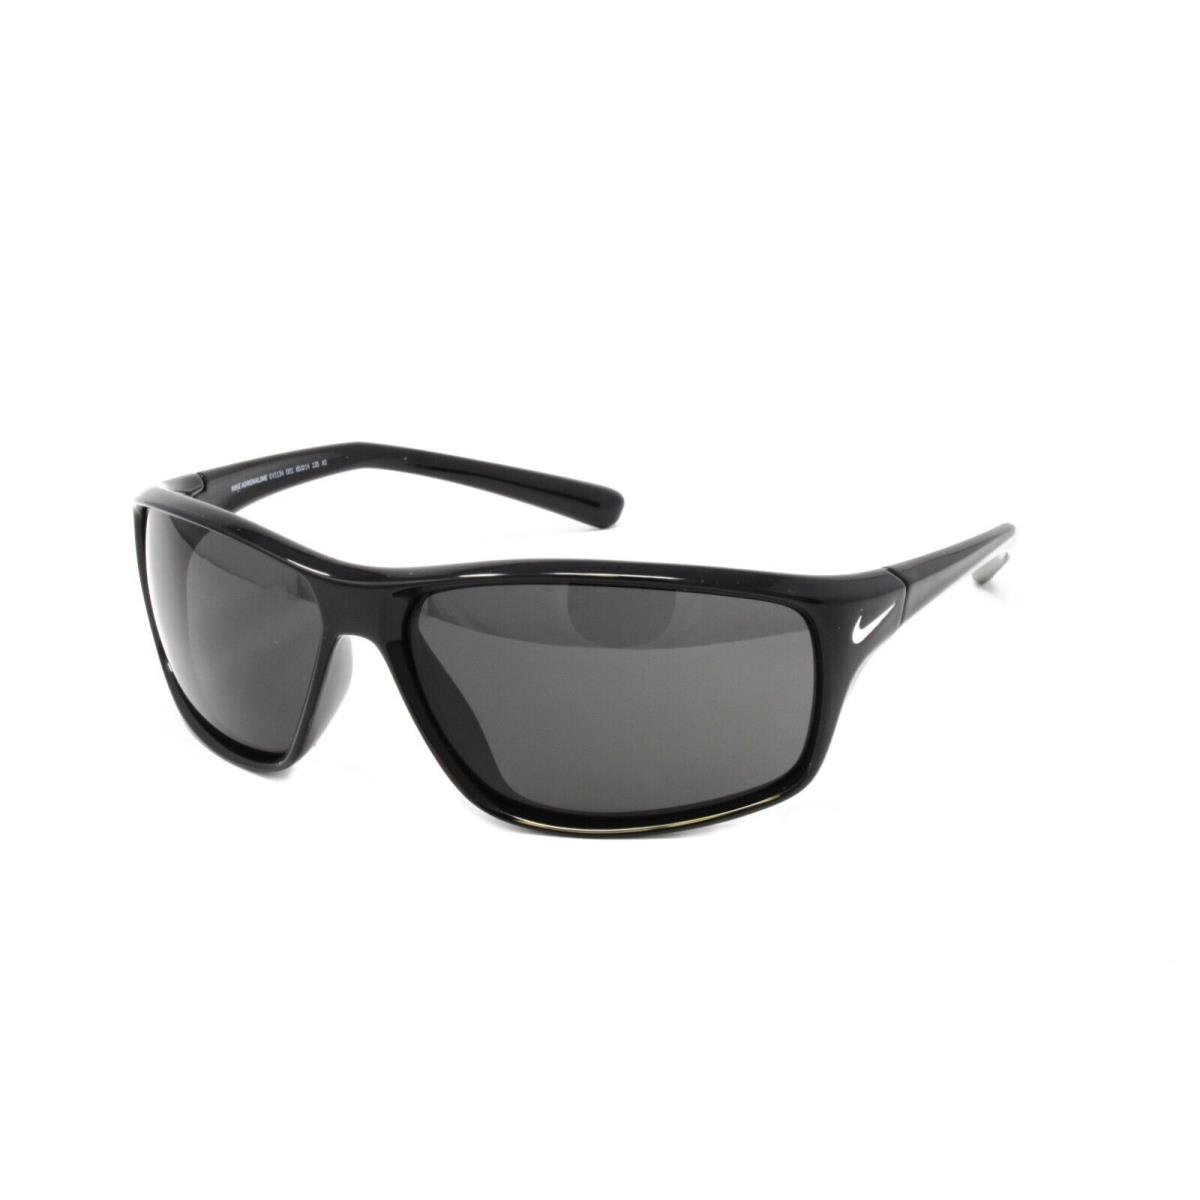 Nike Sunglasses Adrenaline EV1134 001 Shiny Black White 65mm Grey Lens